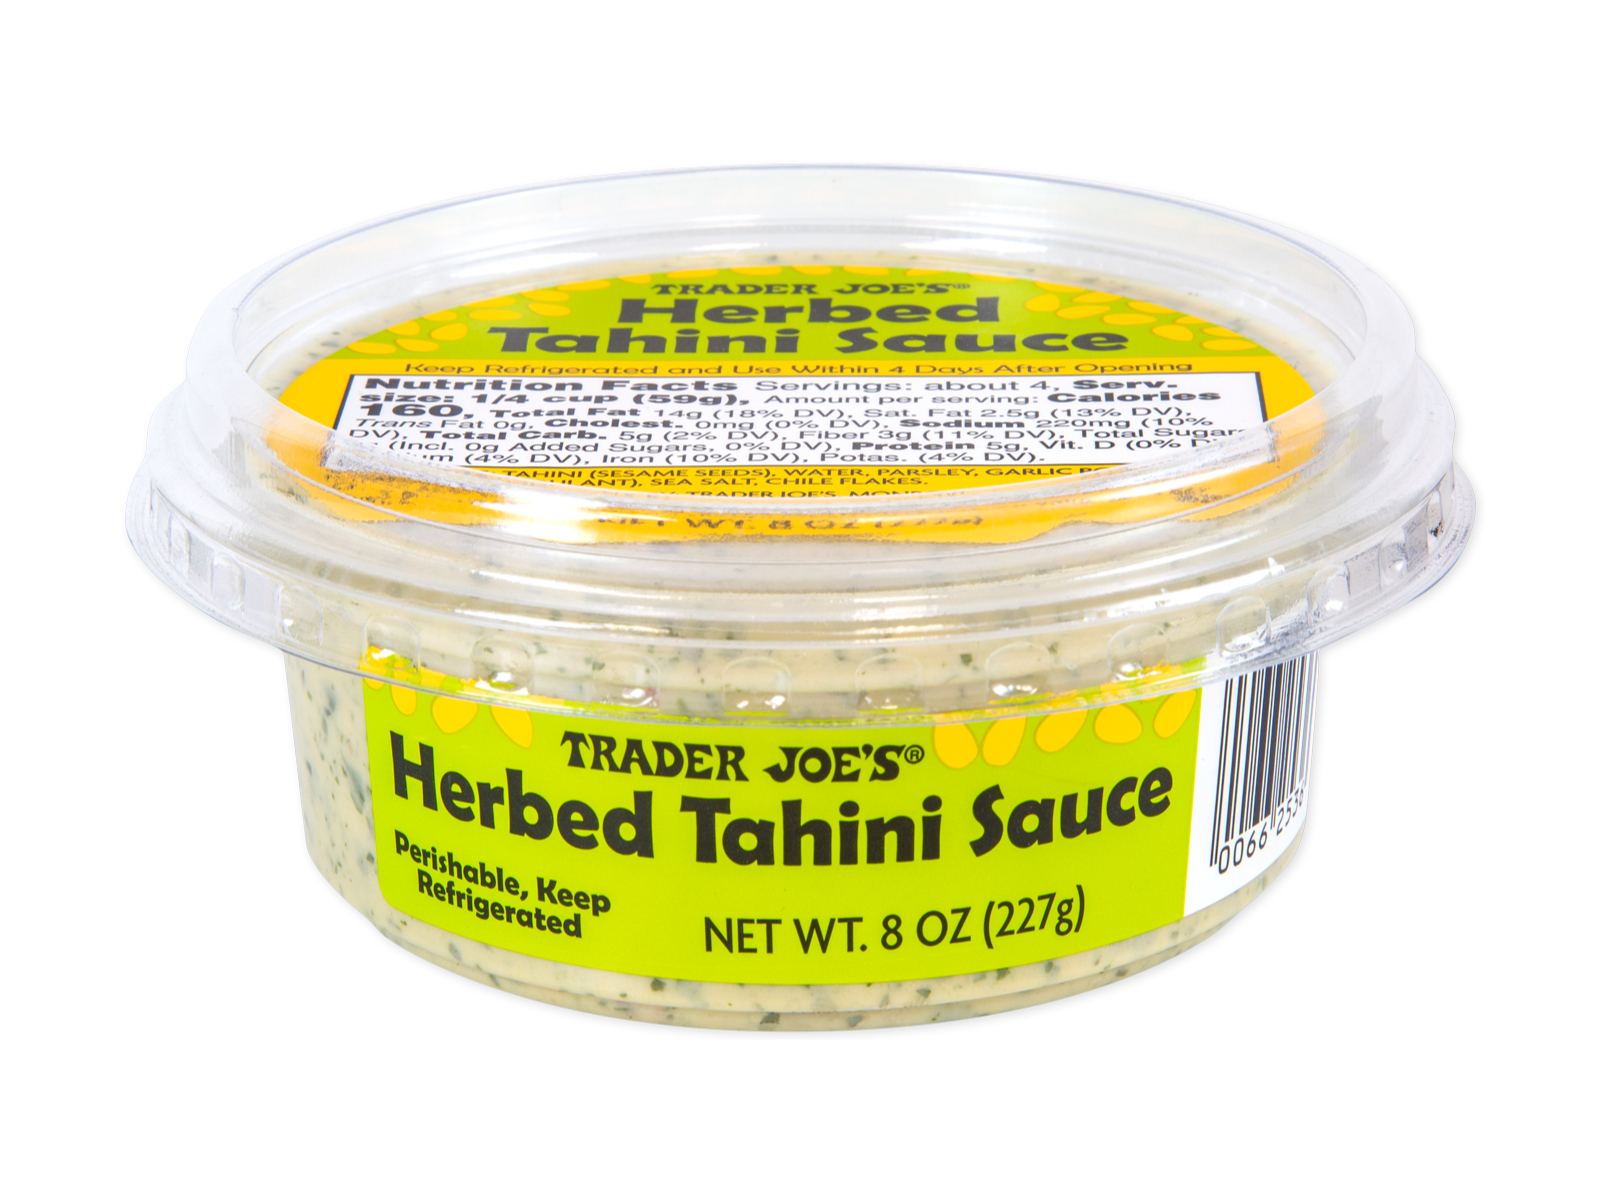 Herbed Tahini Sauce